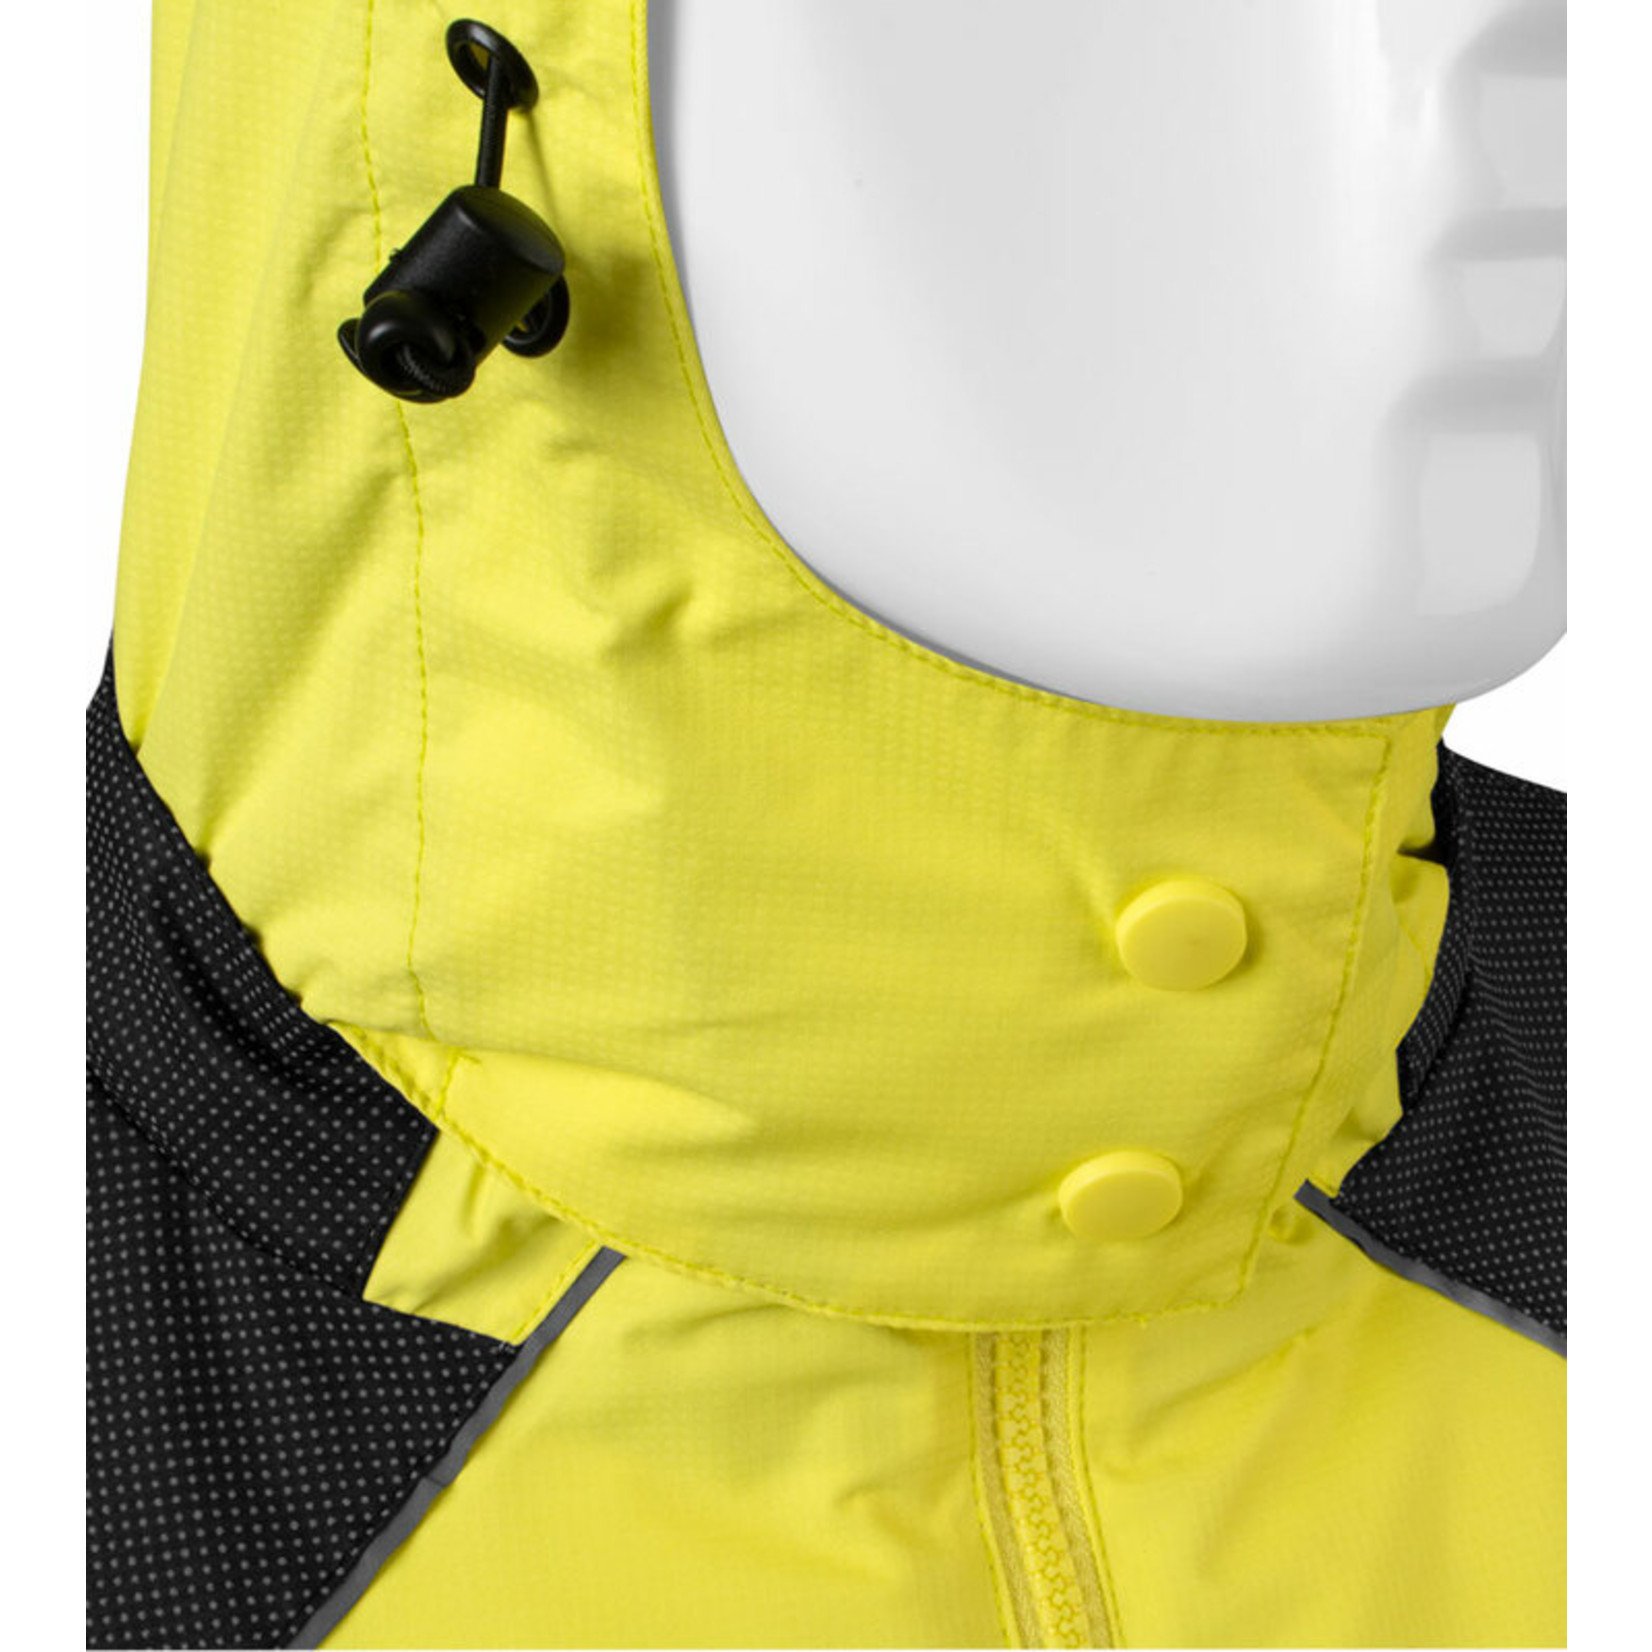 Aero Tech Men's Aero Reflective Cycling Rain Coat - Waterproof Jacket with Zip-Off Sleeves